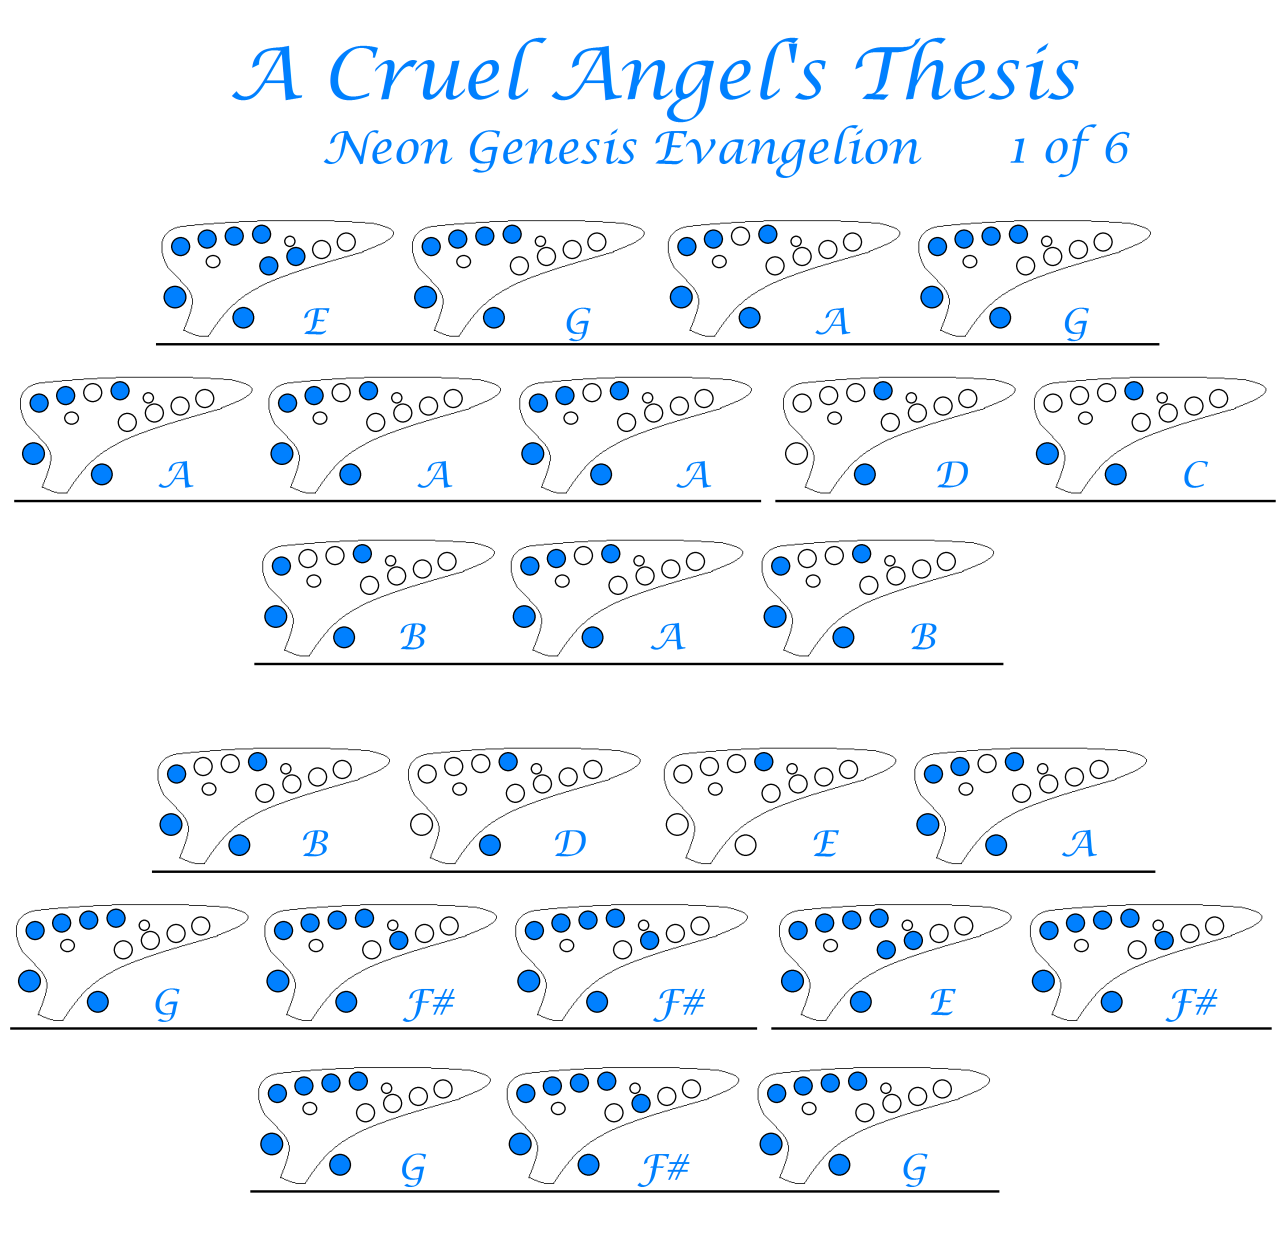 Neon genesis evangelion cruel angel's thesis